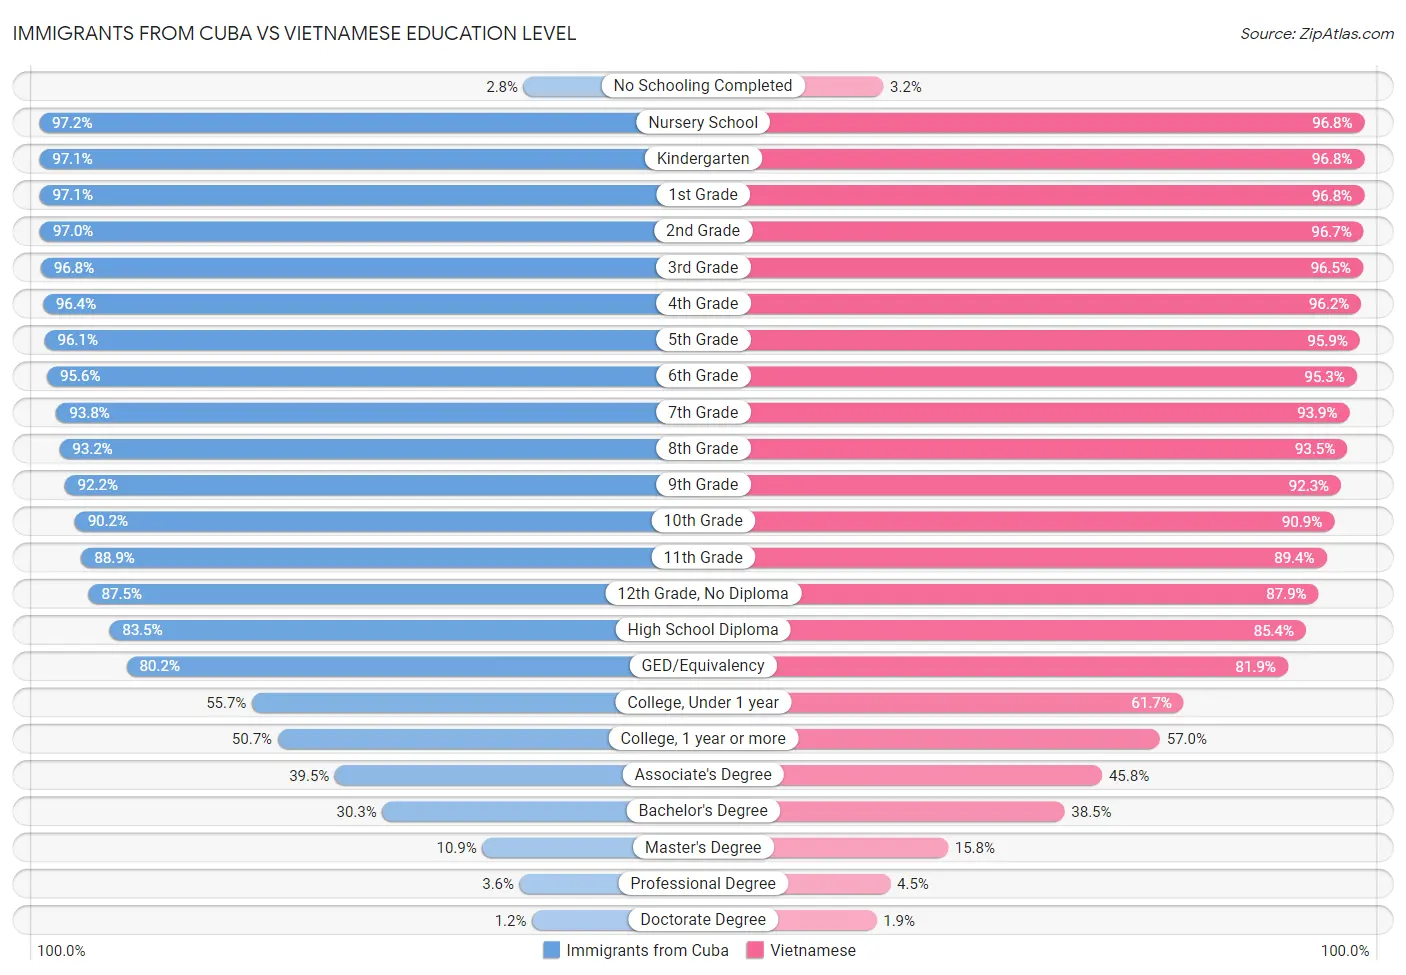 Immigrants from Cuba vs Vietnamese Education Level